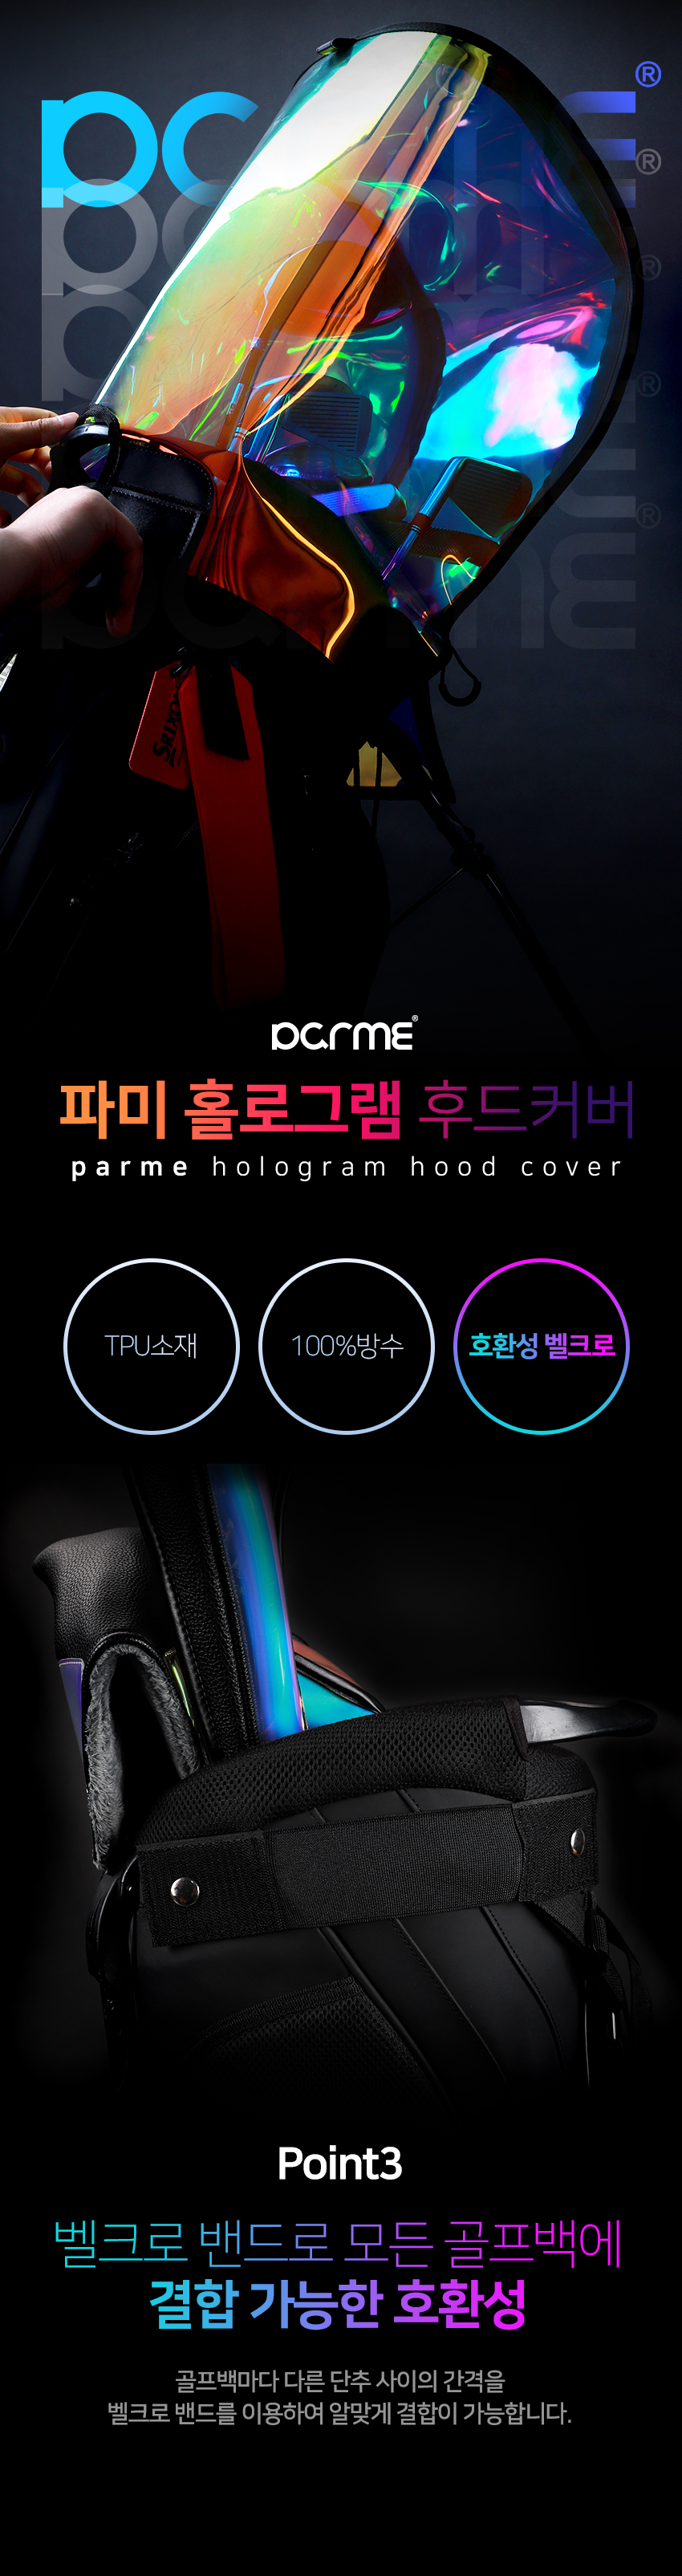 parme_hologram_hood_cover_05.jpg